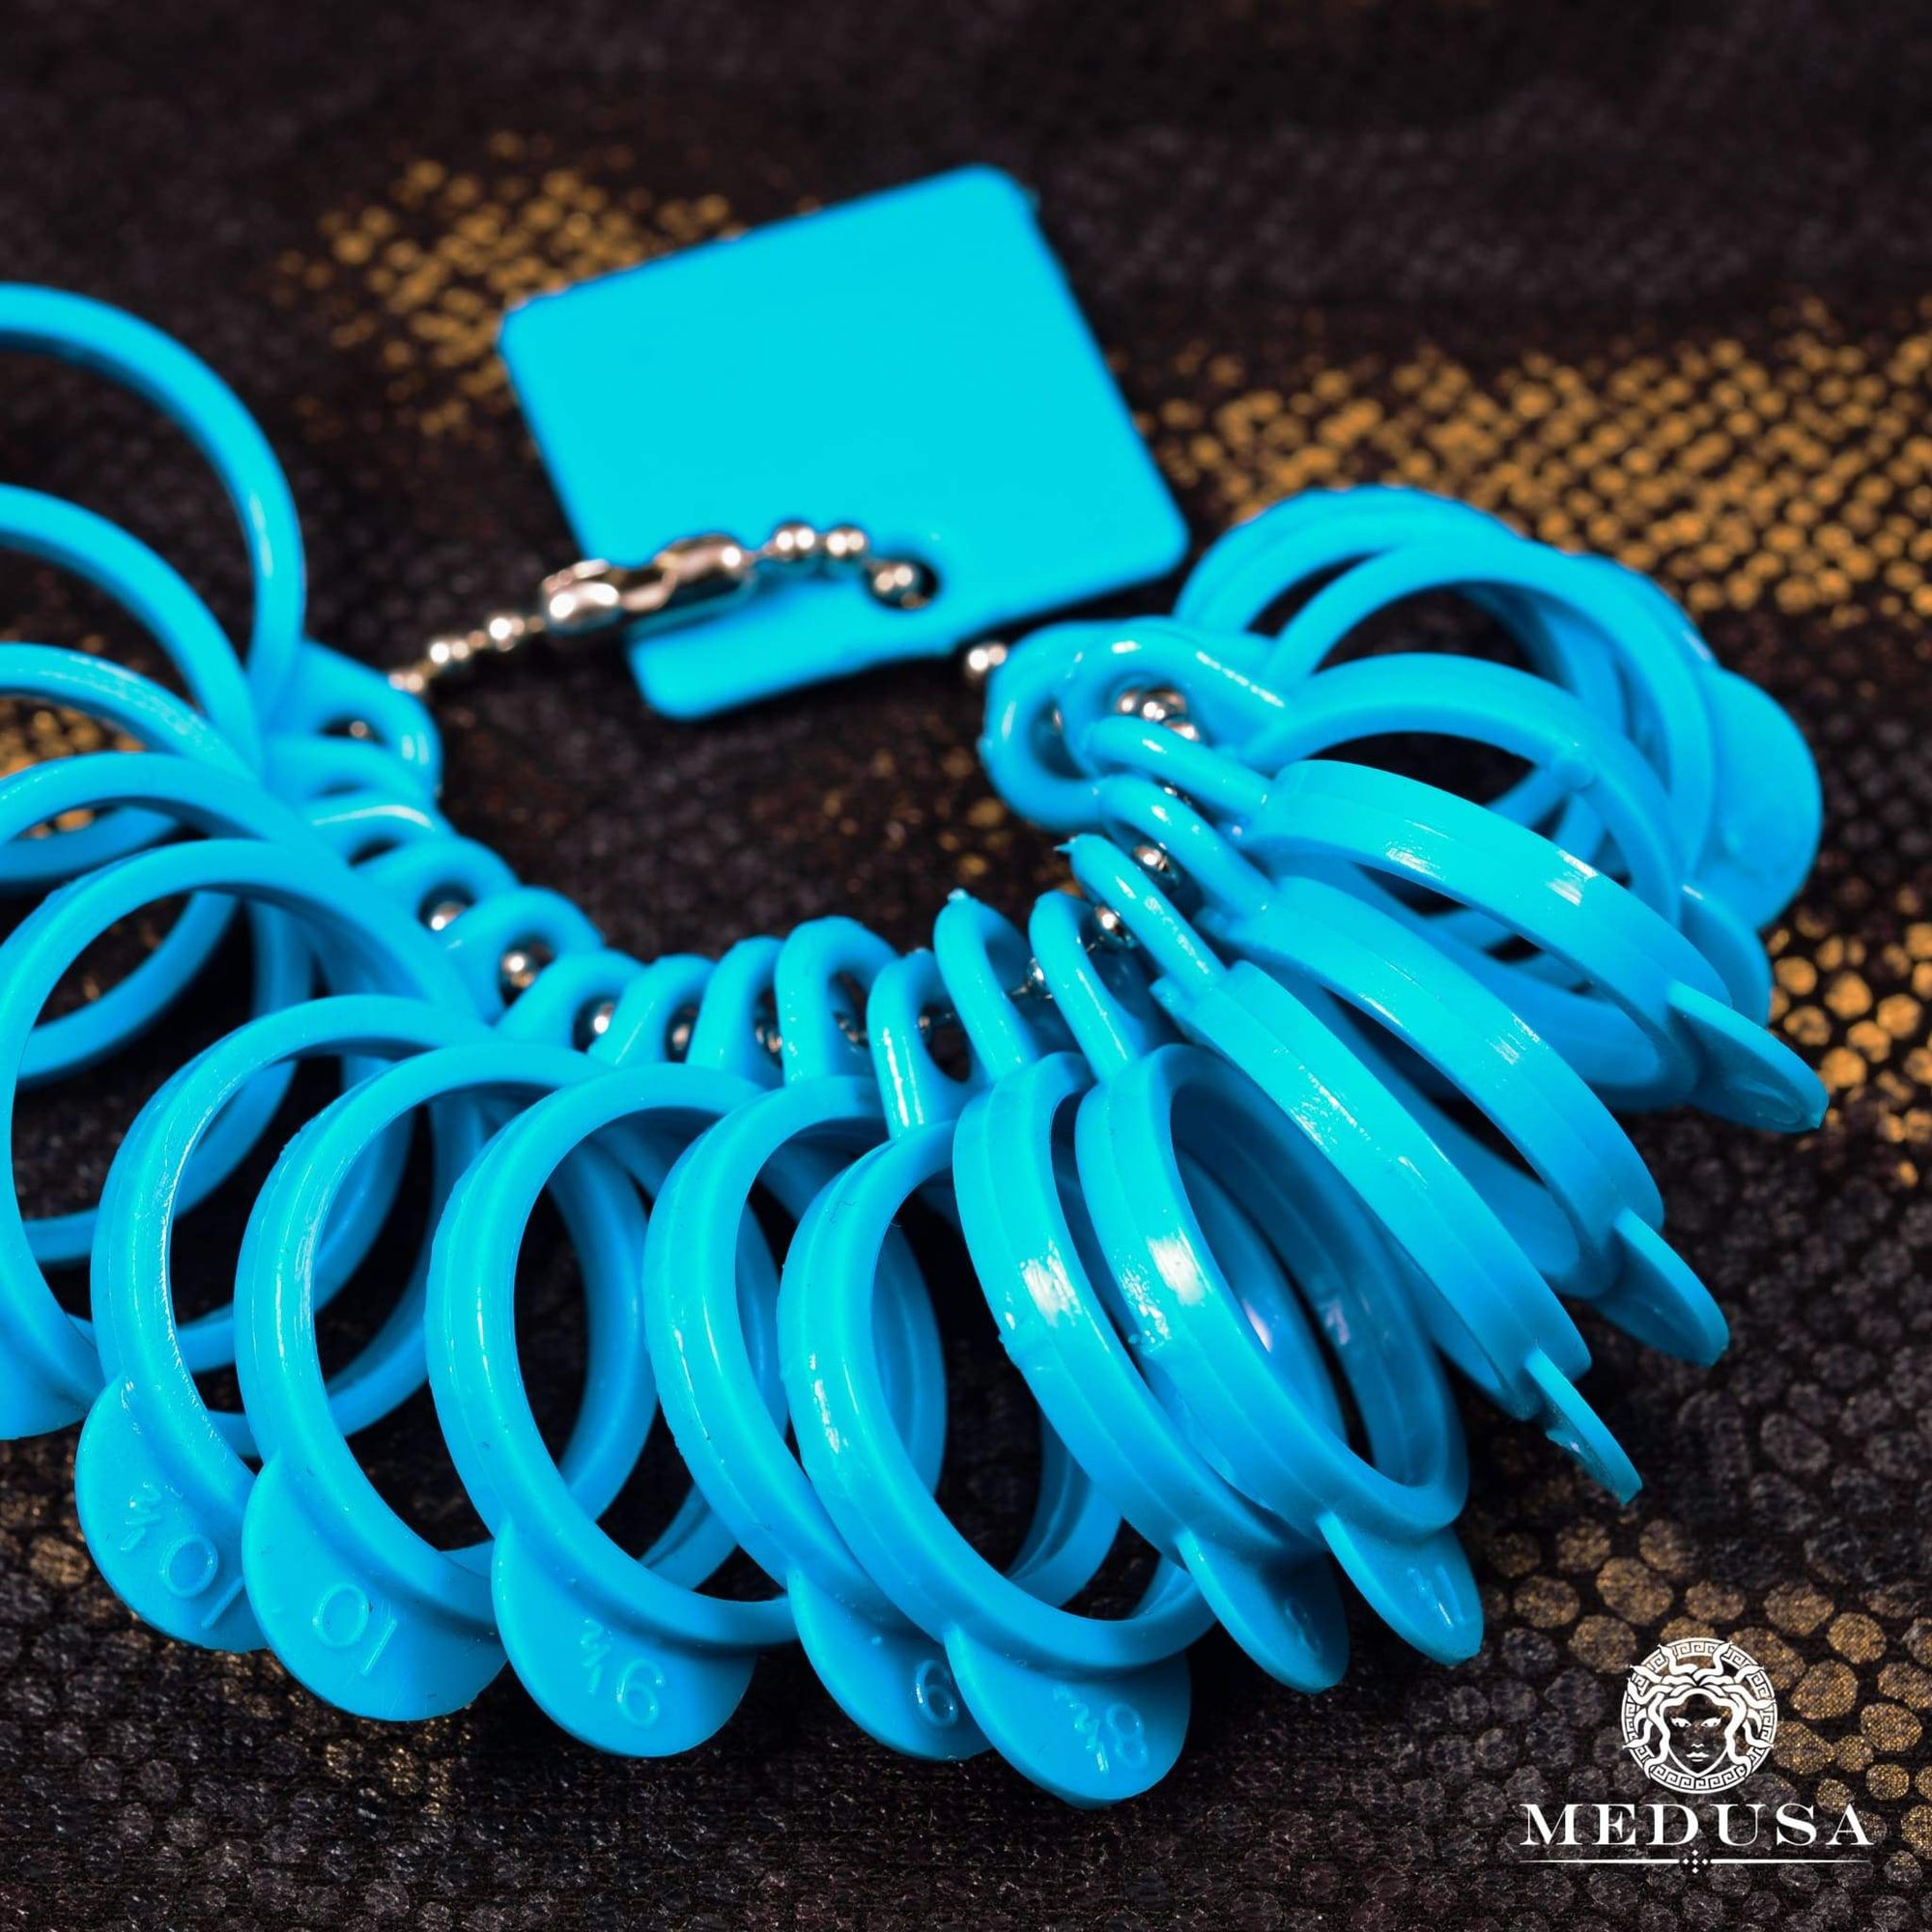 Medusa Jewelry | Miscellaneous Item Plastic Ring Sizer - Free